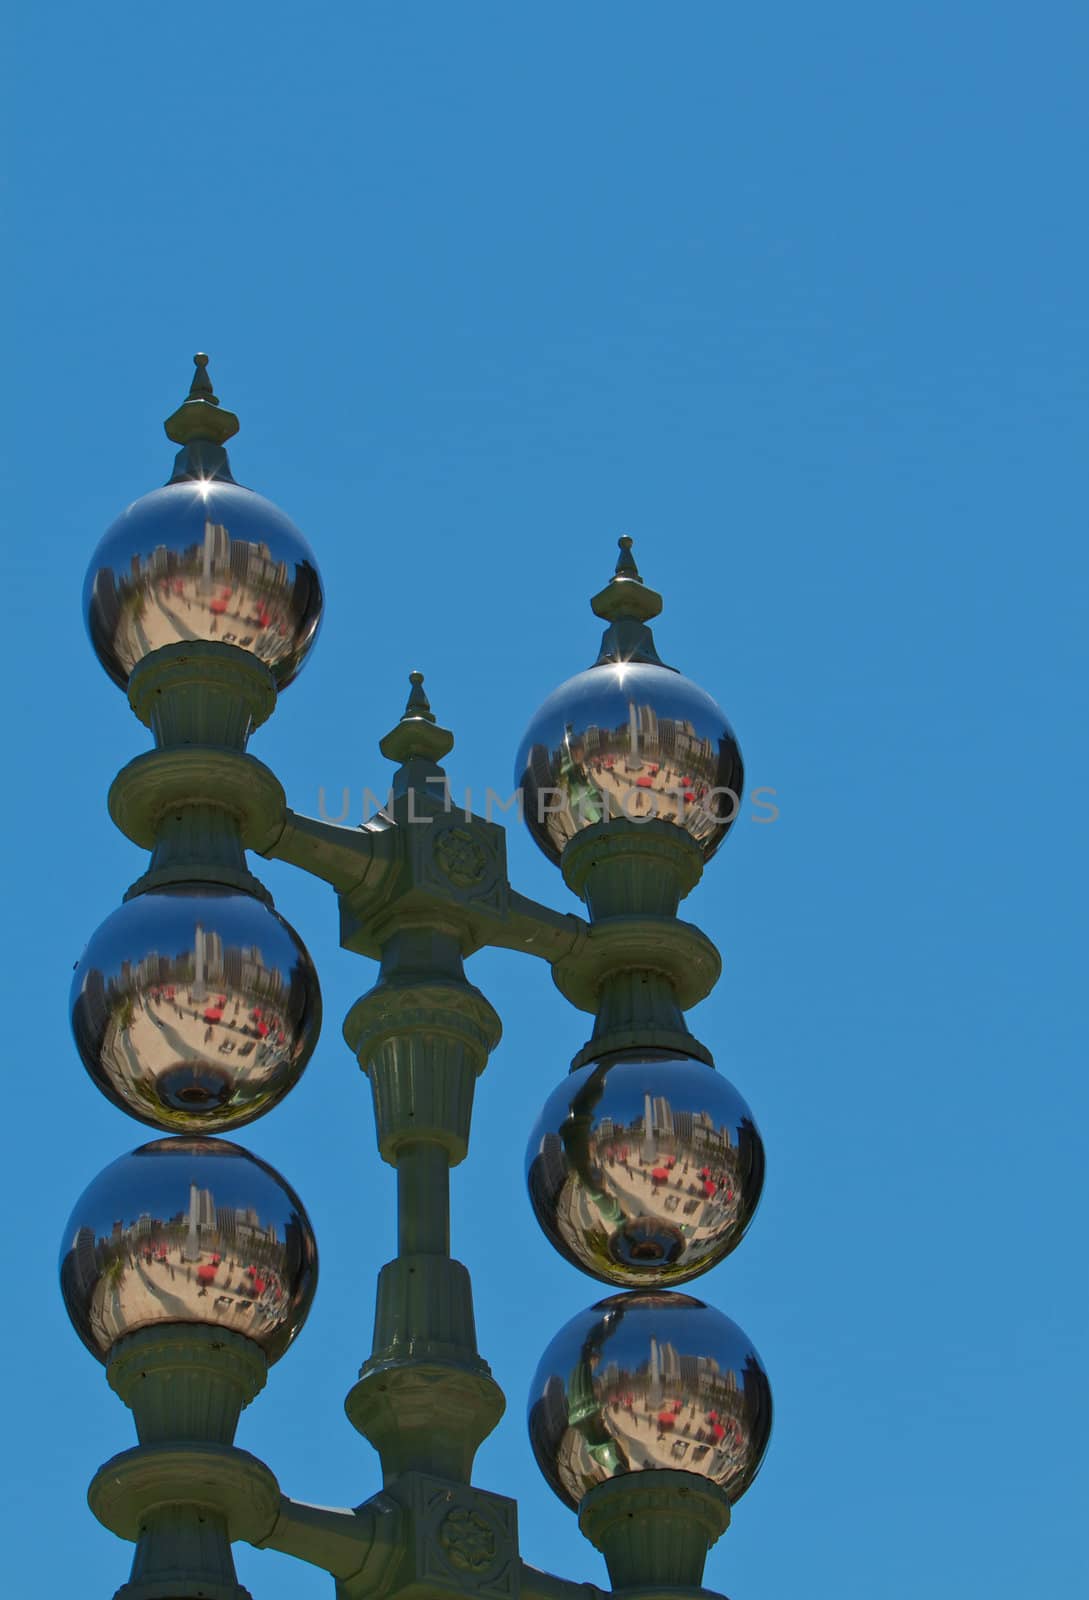 Unusual six mirror sphere or globe light post